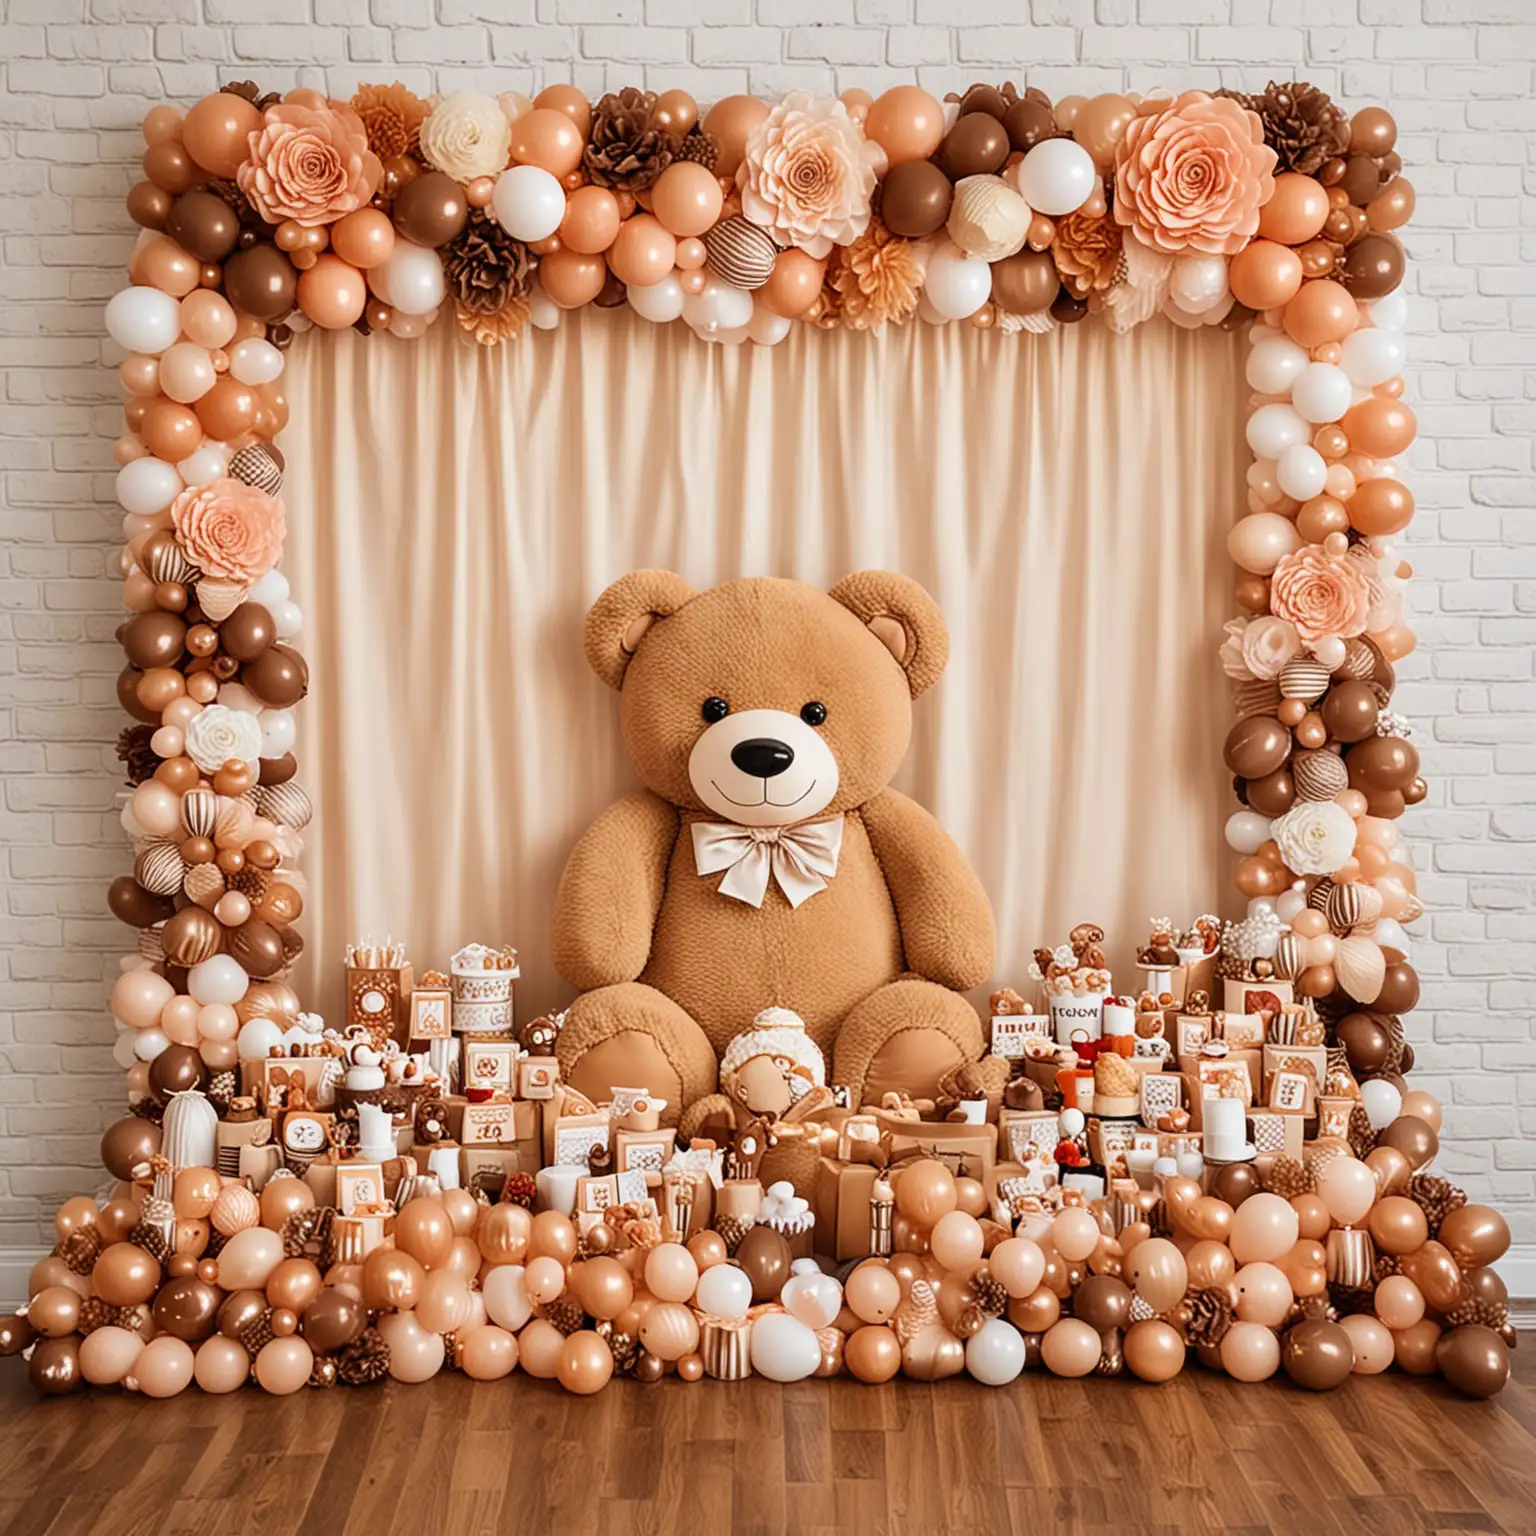 Teddy bear party decor backdrop decoration 